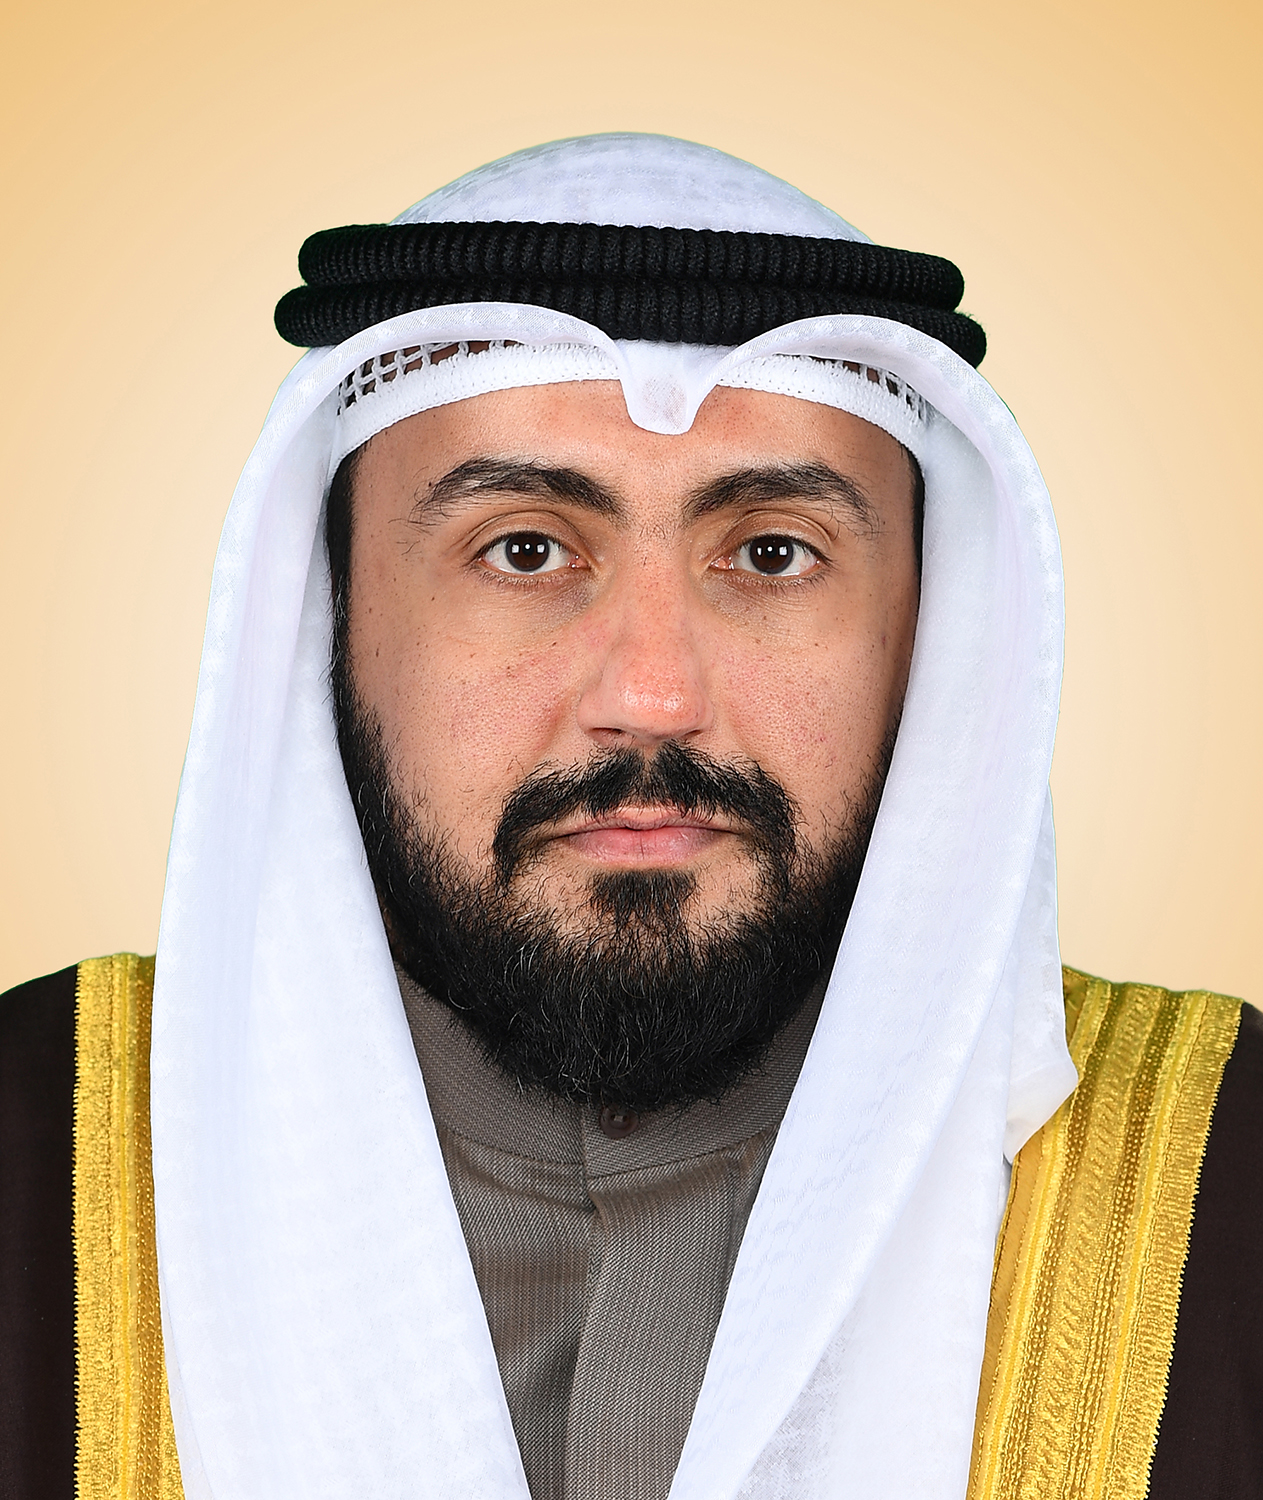 Kuwaiti Health Minister Sheikh Dr. Basel Al-Sabah